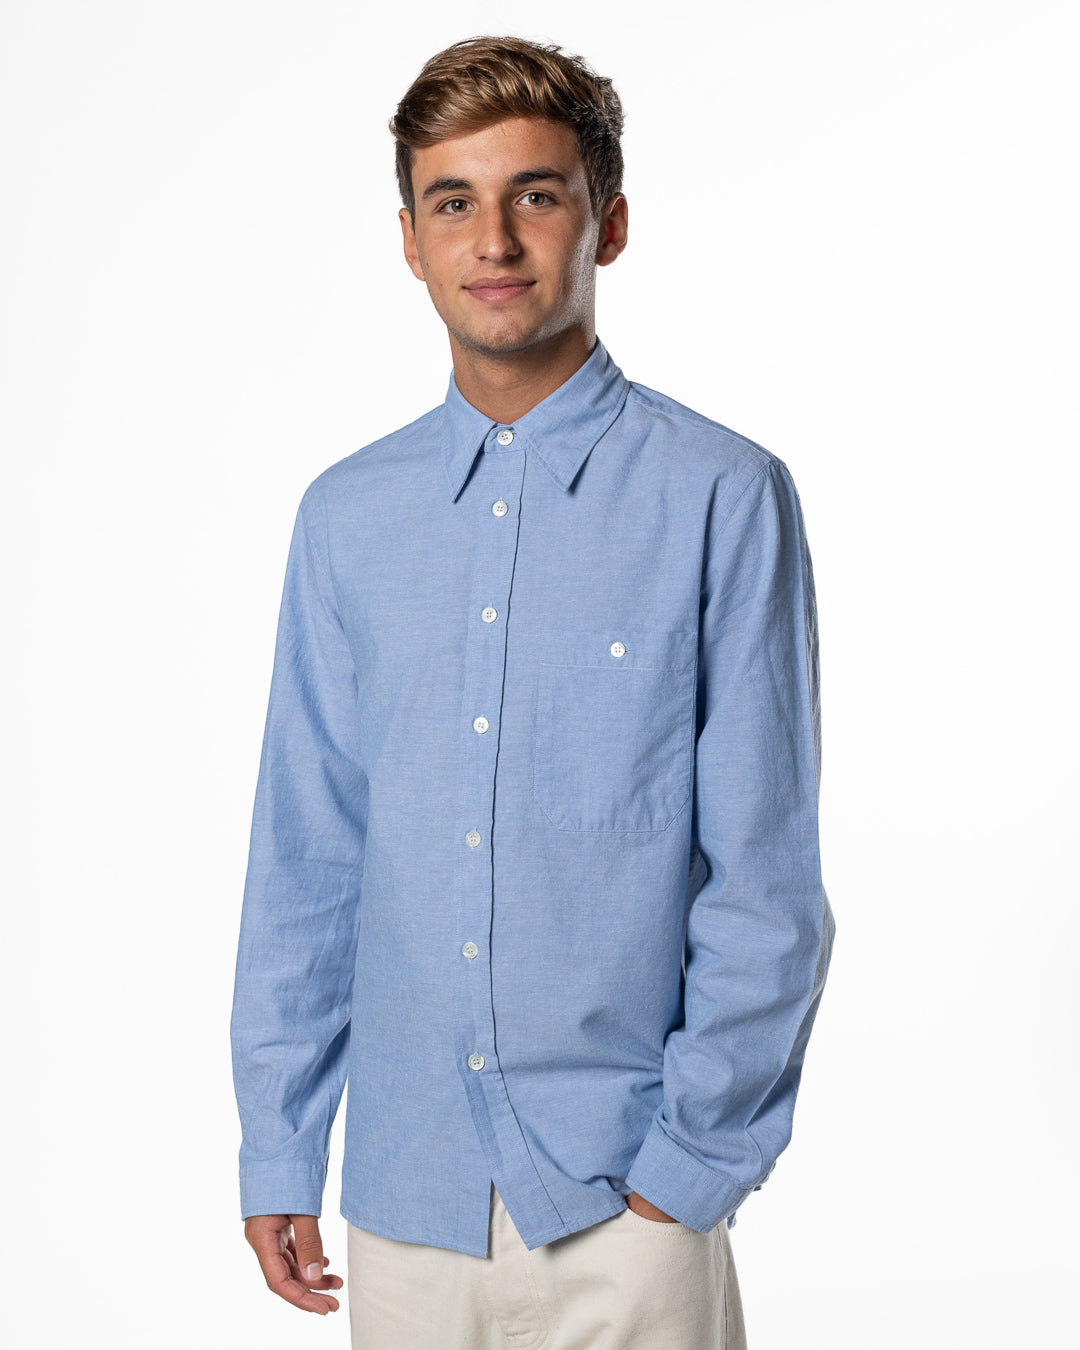 Lanca Worker Shirt - Blue Chambray